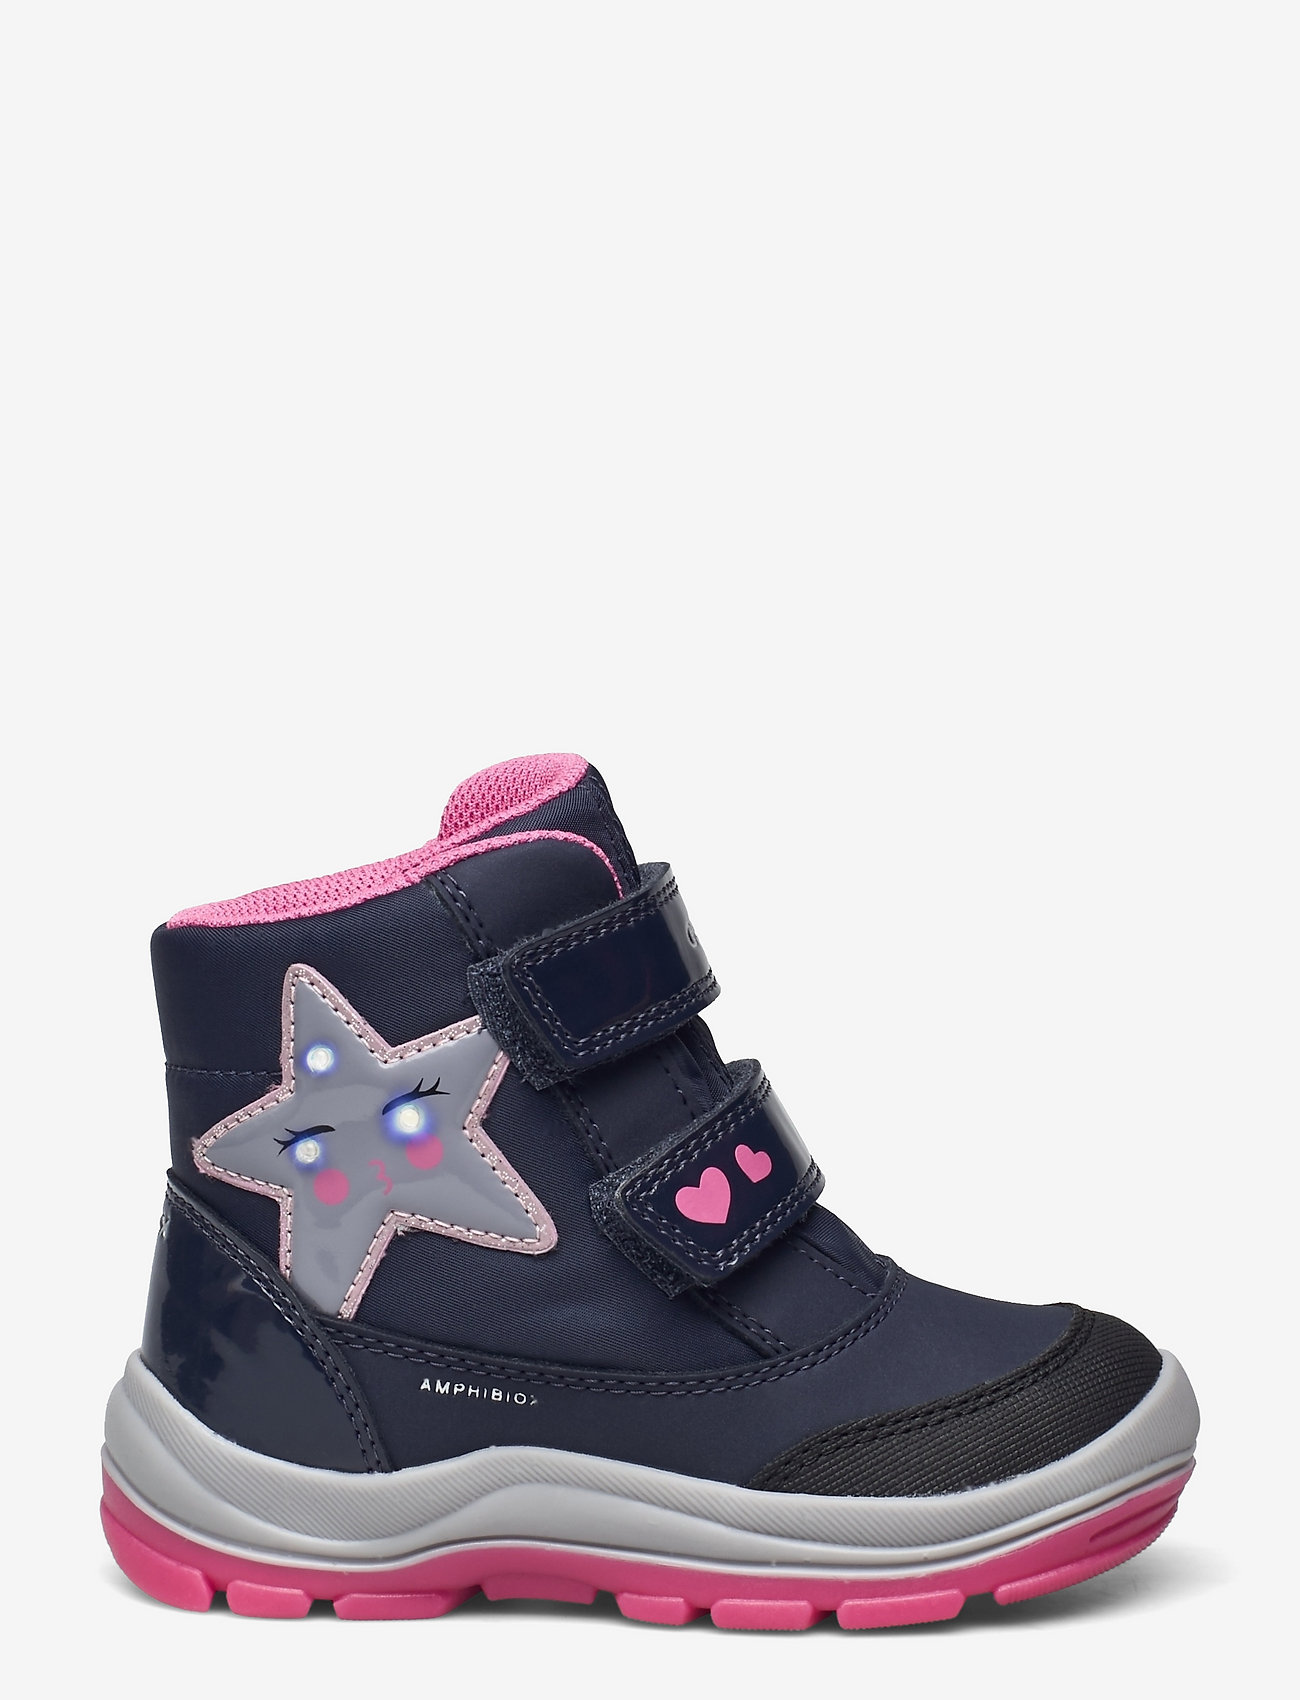 GEOX - B FLANFIL GIRL B ABX - shoes - navy/pink - 1